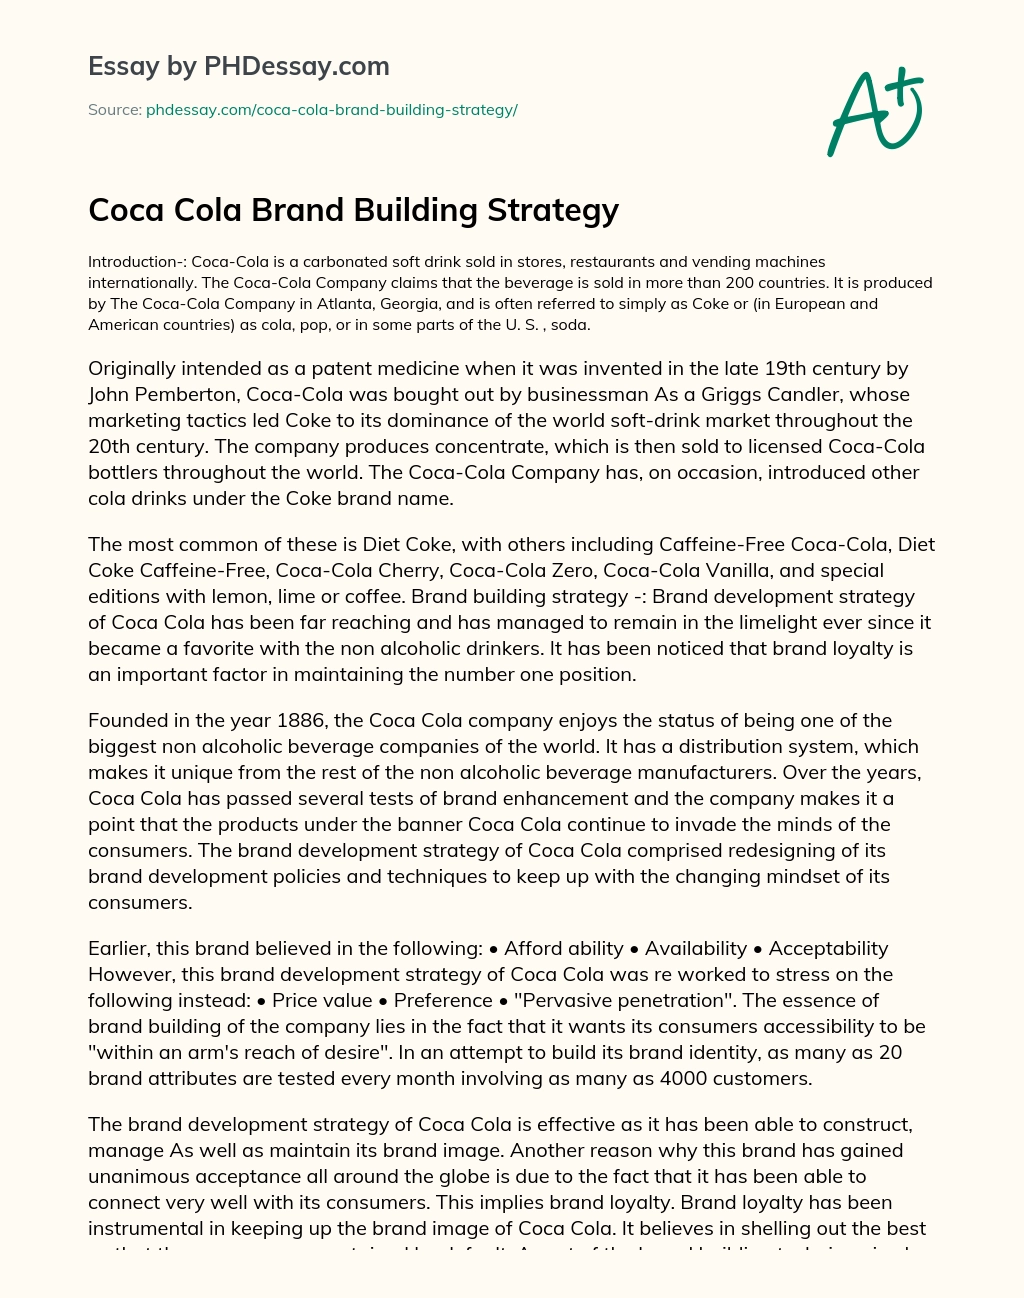 Coca Cola Brand Building Strategy essay